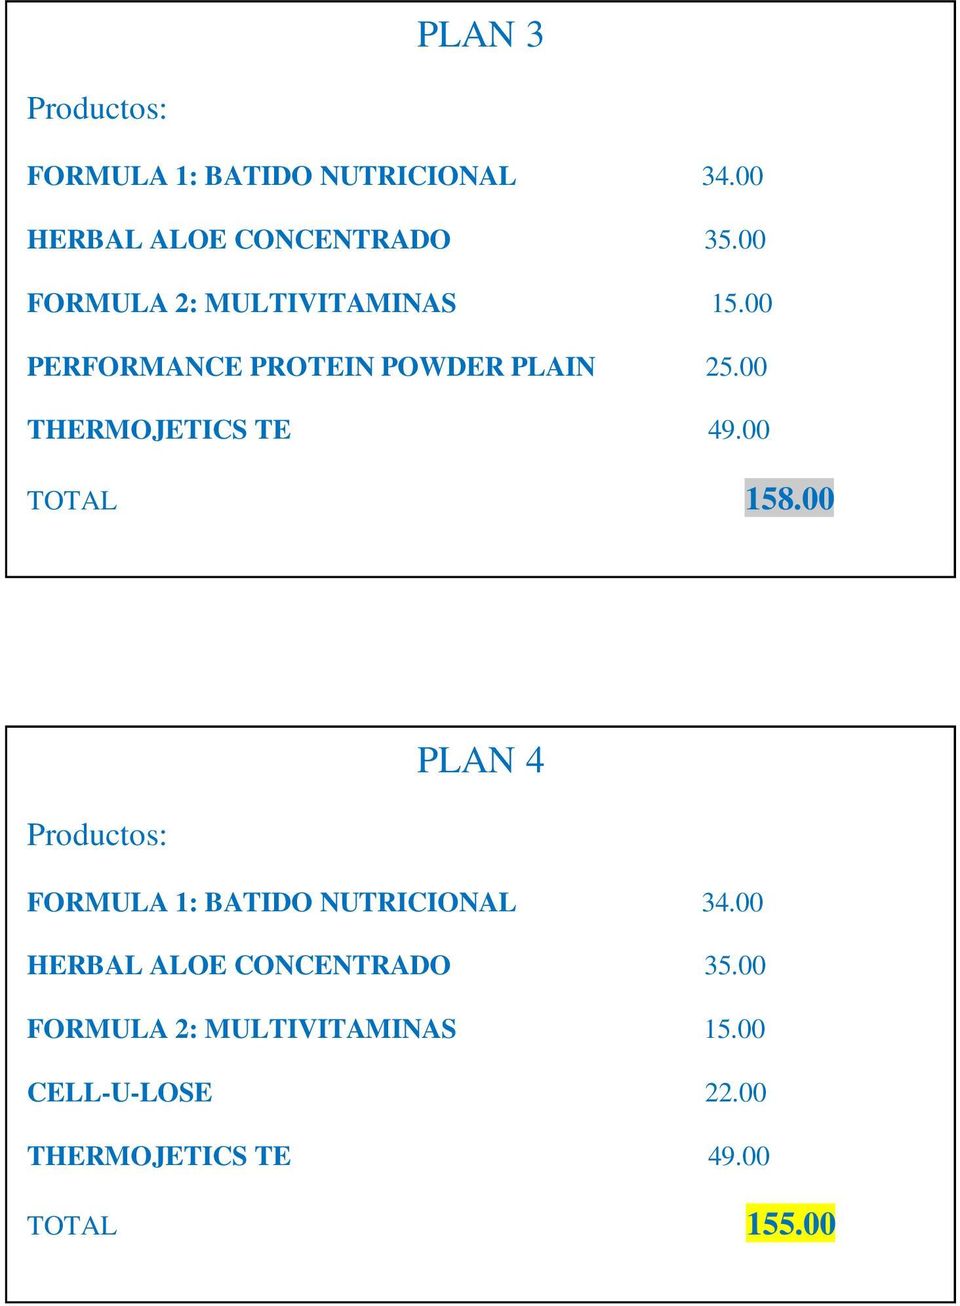 00 THERMOJETICS TE 49.00 TOTAL 158.00 PLAN 4 Productos: FORMULA 1: BATIDO NUTRICIONAL 34.